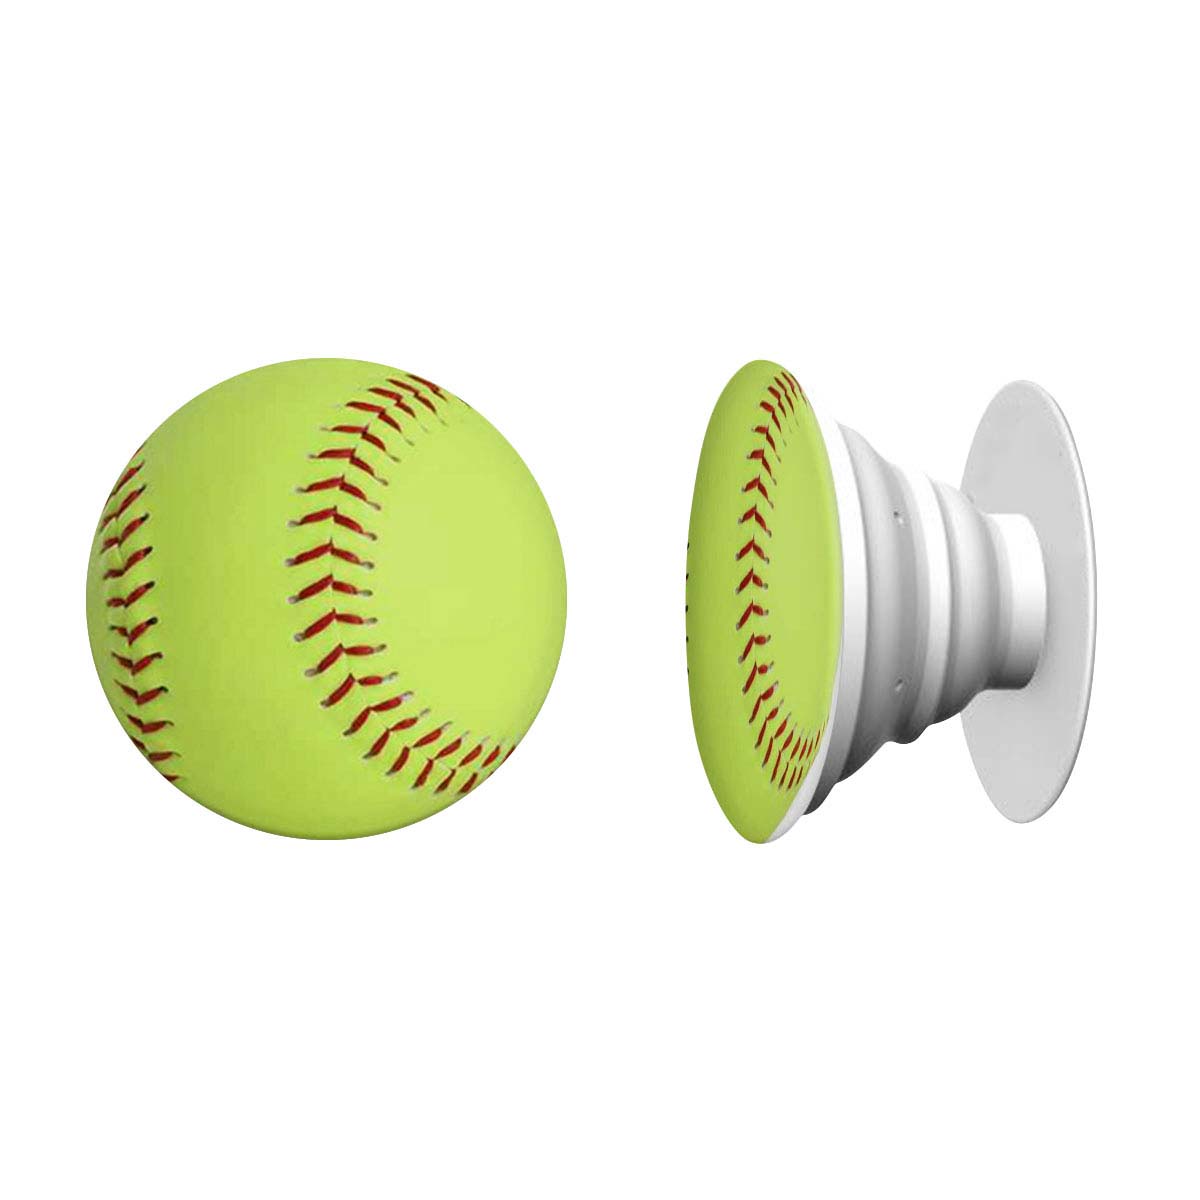 Wholesale Tennis Ball Popsockets| CheapS Sports Popsockets in Bulk - Custom Phone Gadgets